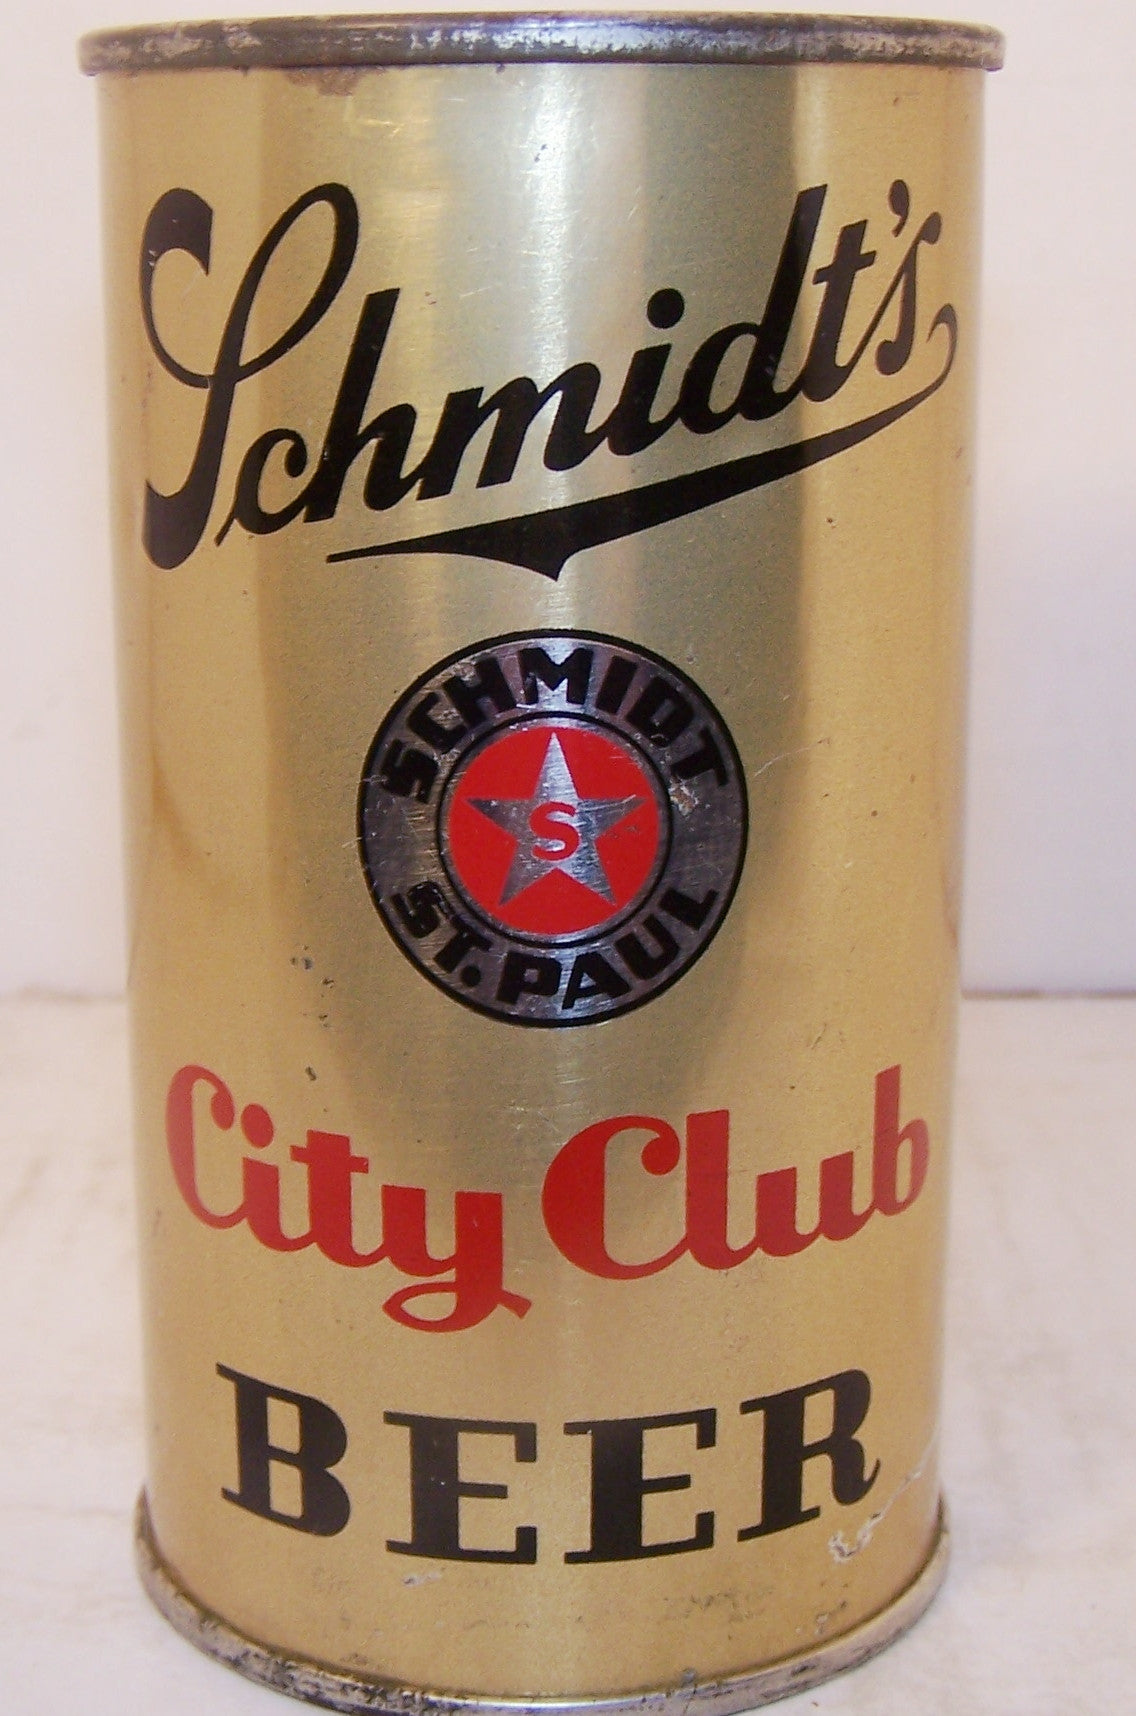 Schmidt's City Club Beer, Lilek Page # 744, Grade 1   Sold on 03/08/18